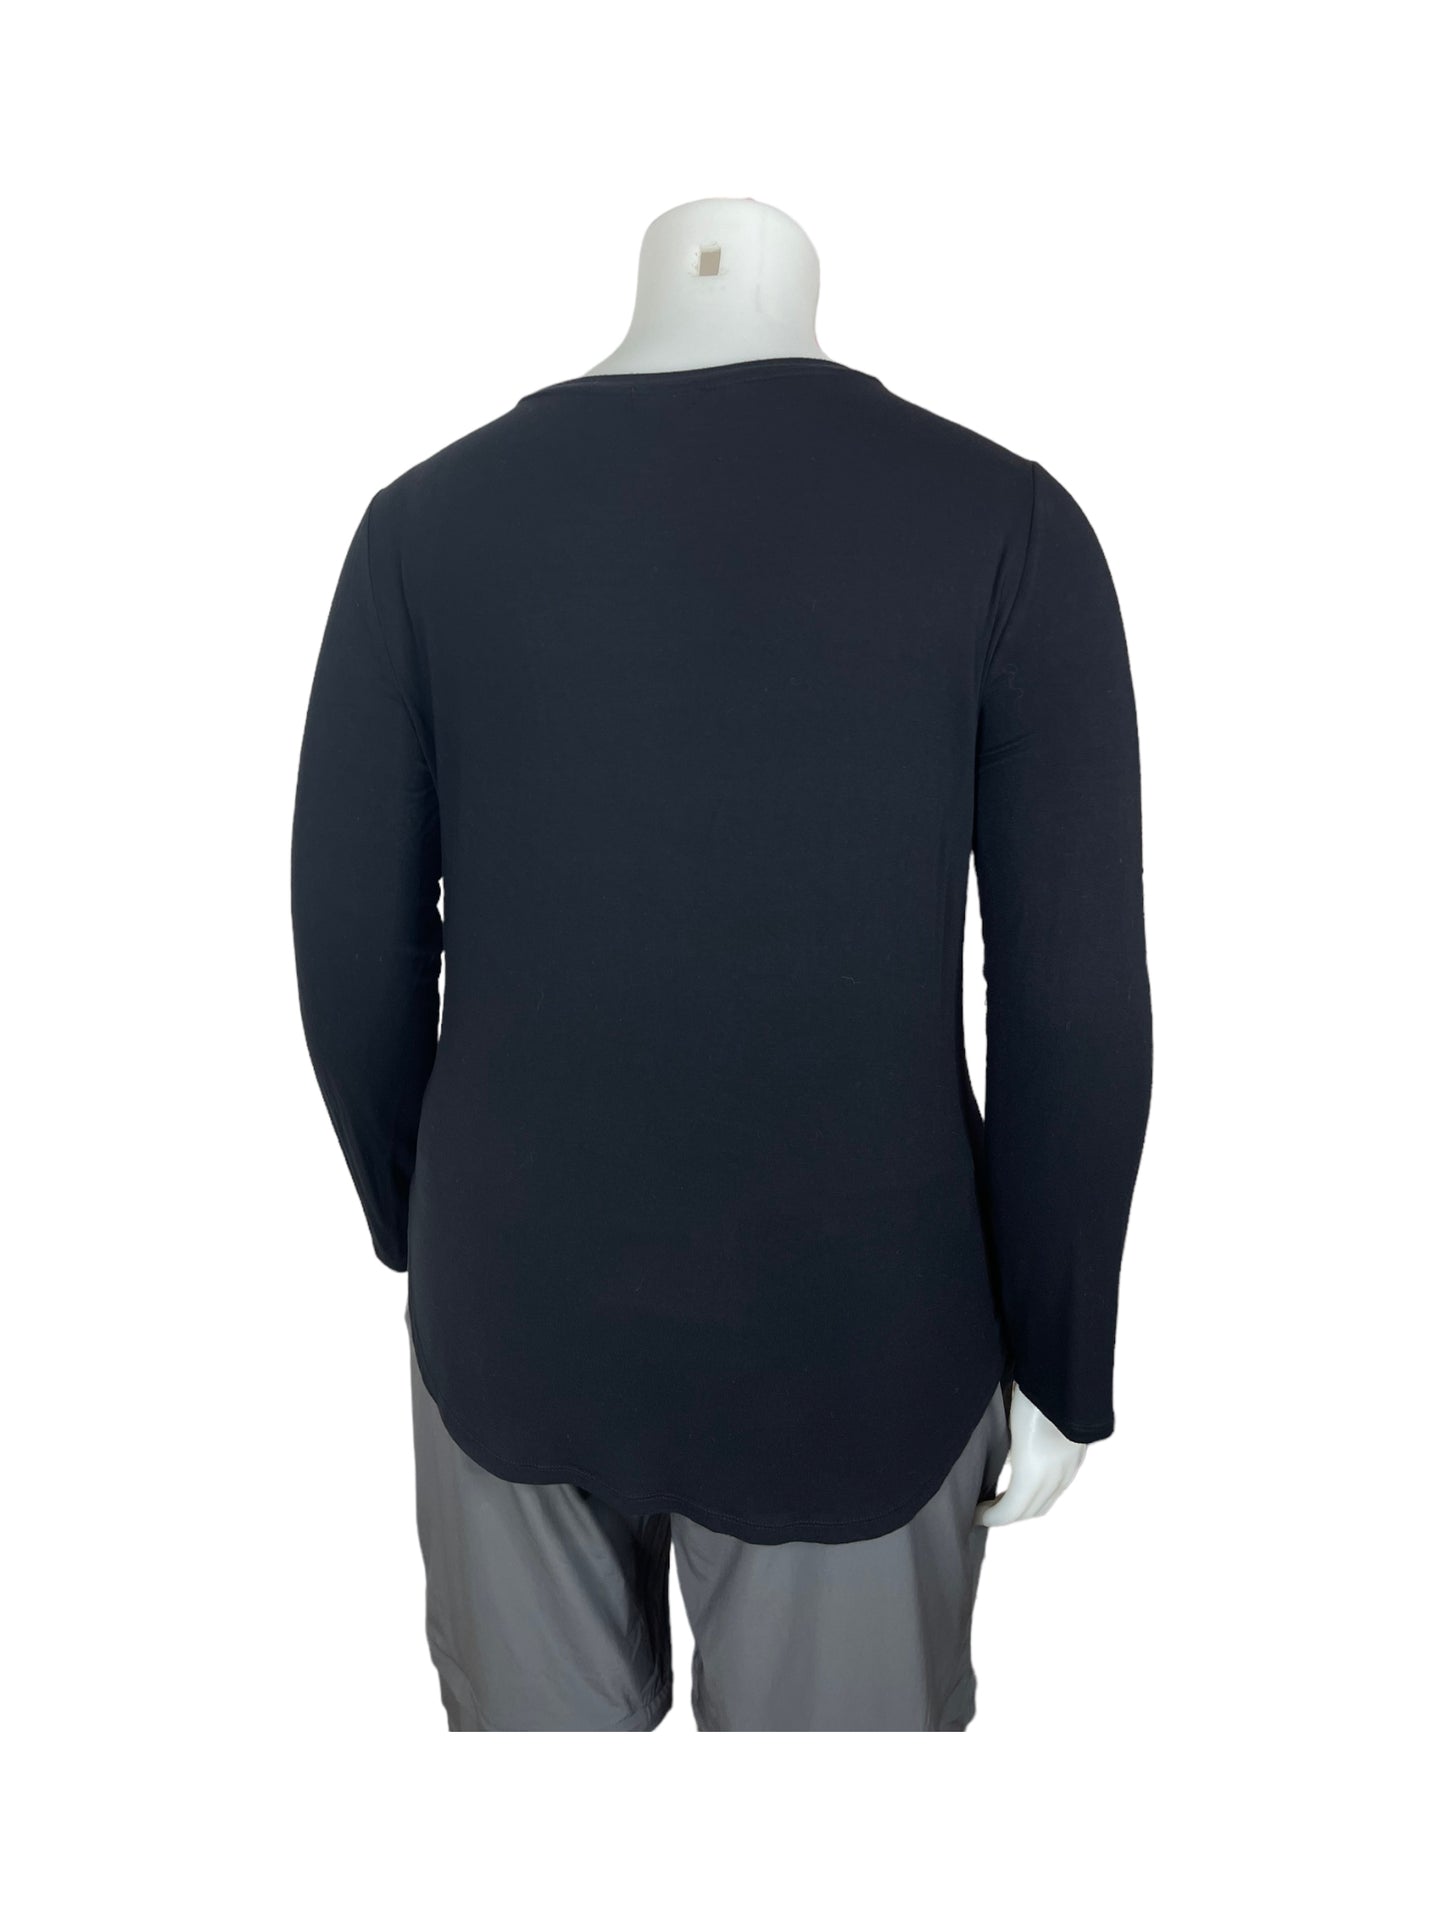 “Old Navy” Black Round-Neck, Long-Sleeved Shirt (XXL)